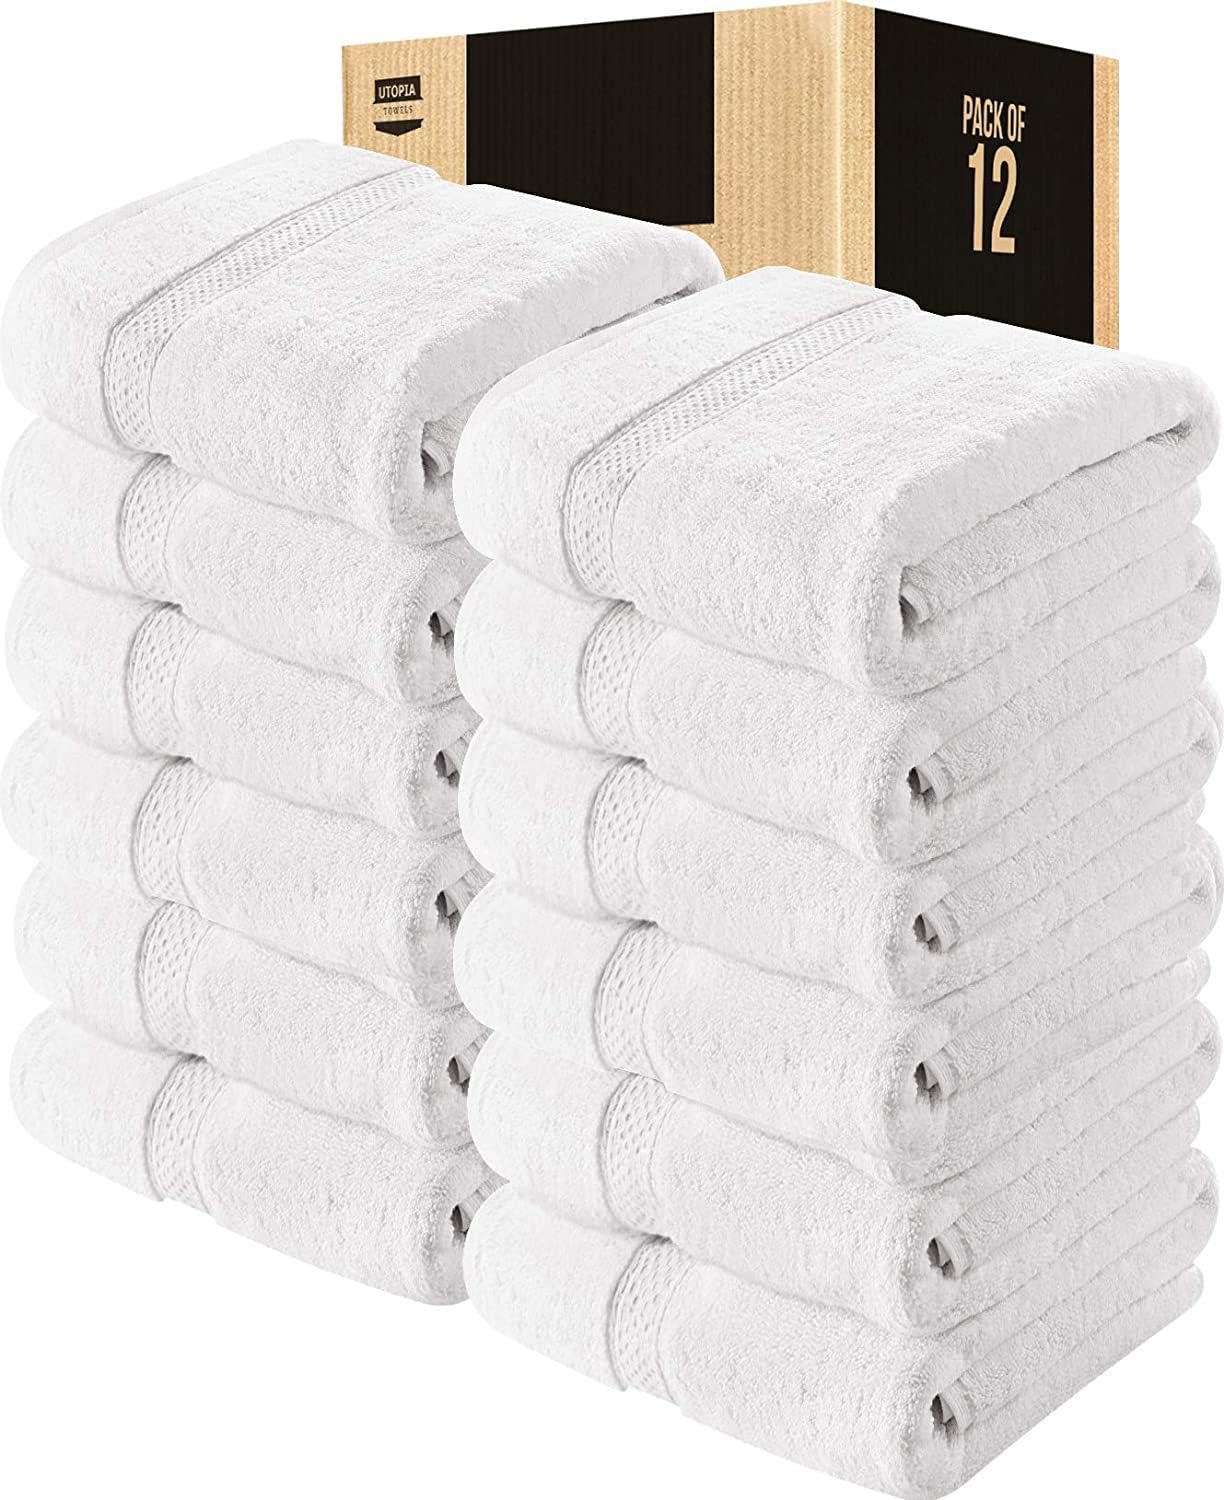 Utopia towels luxury white bath towels 600 GSM Bath Towels $13.82